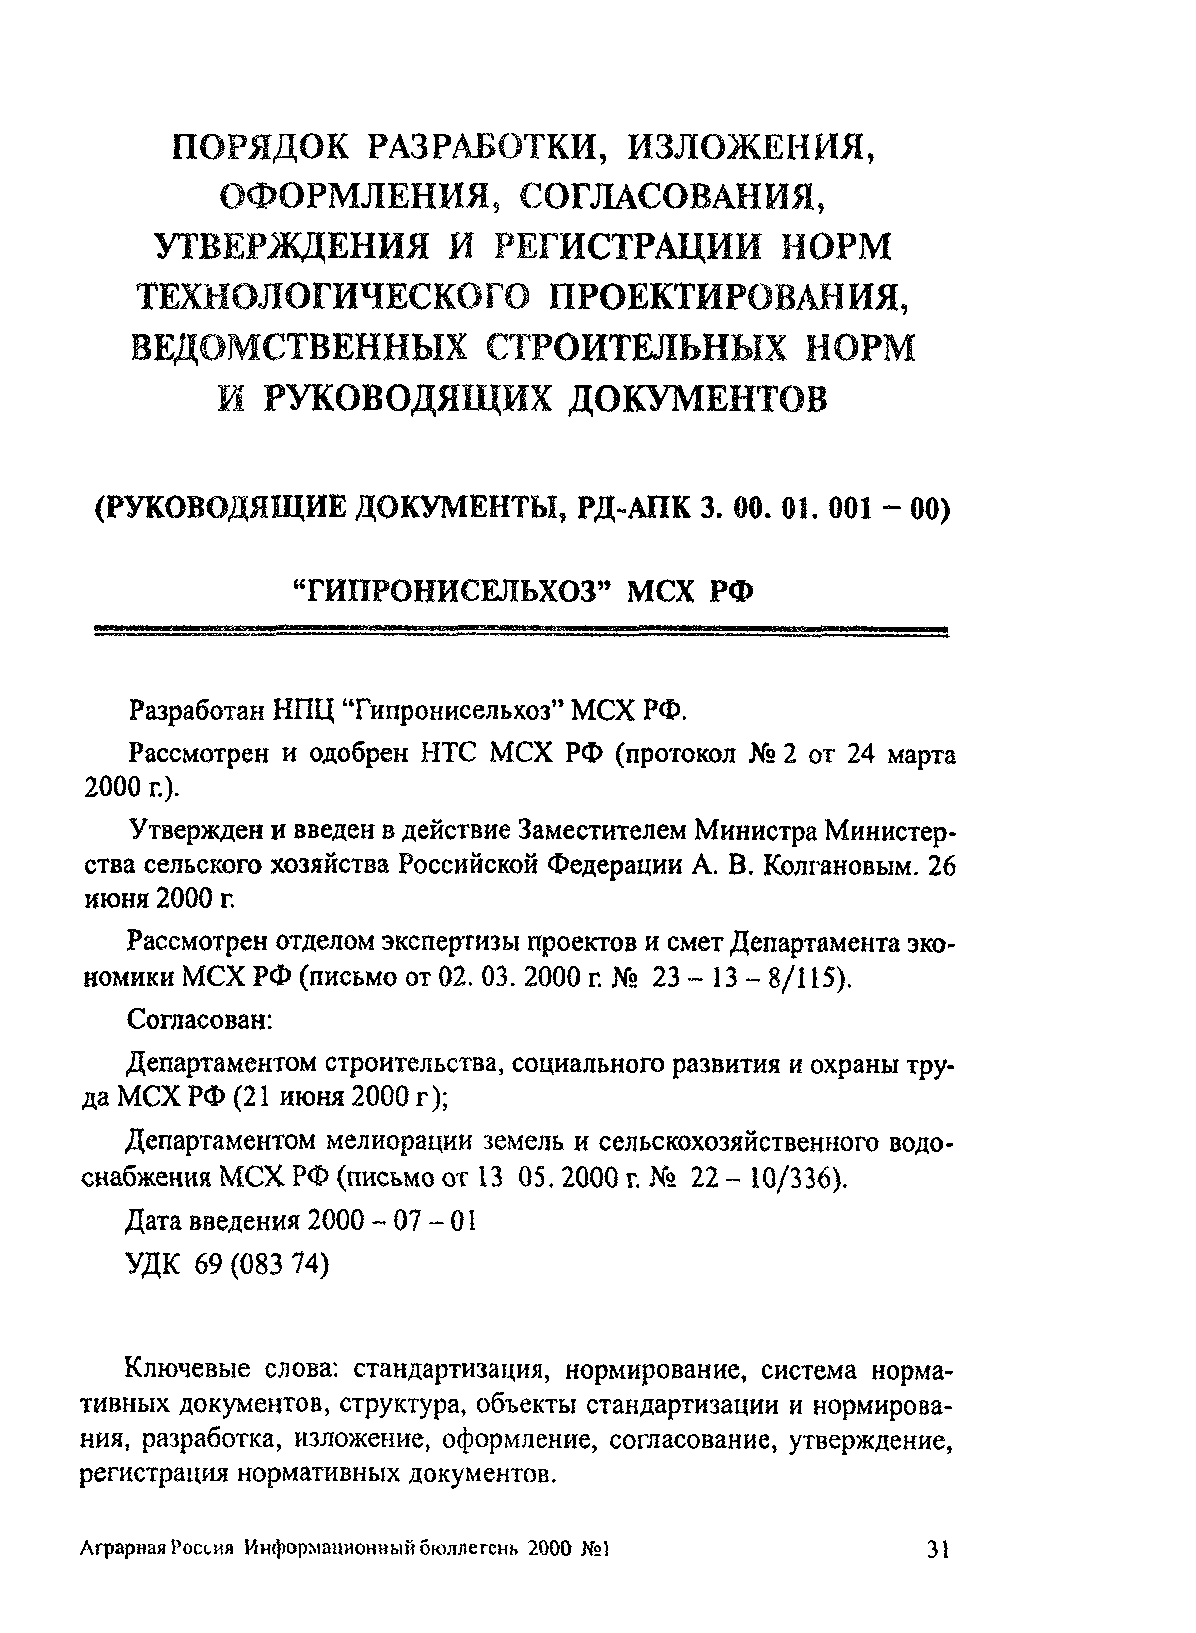 РД-АПК 3.00.01.001-00